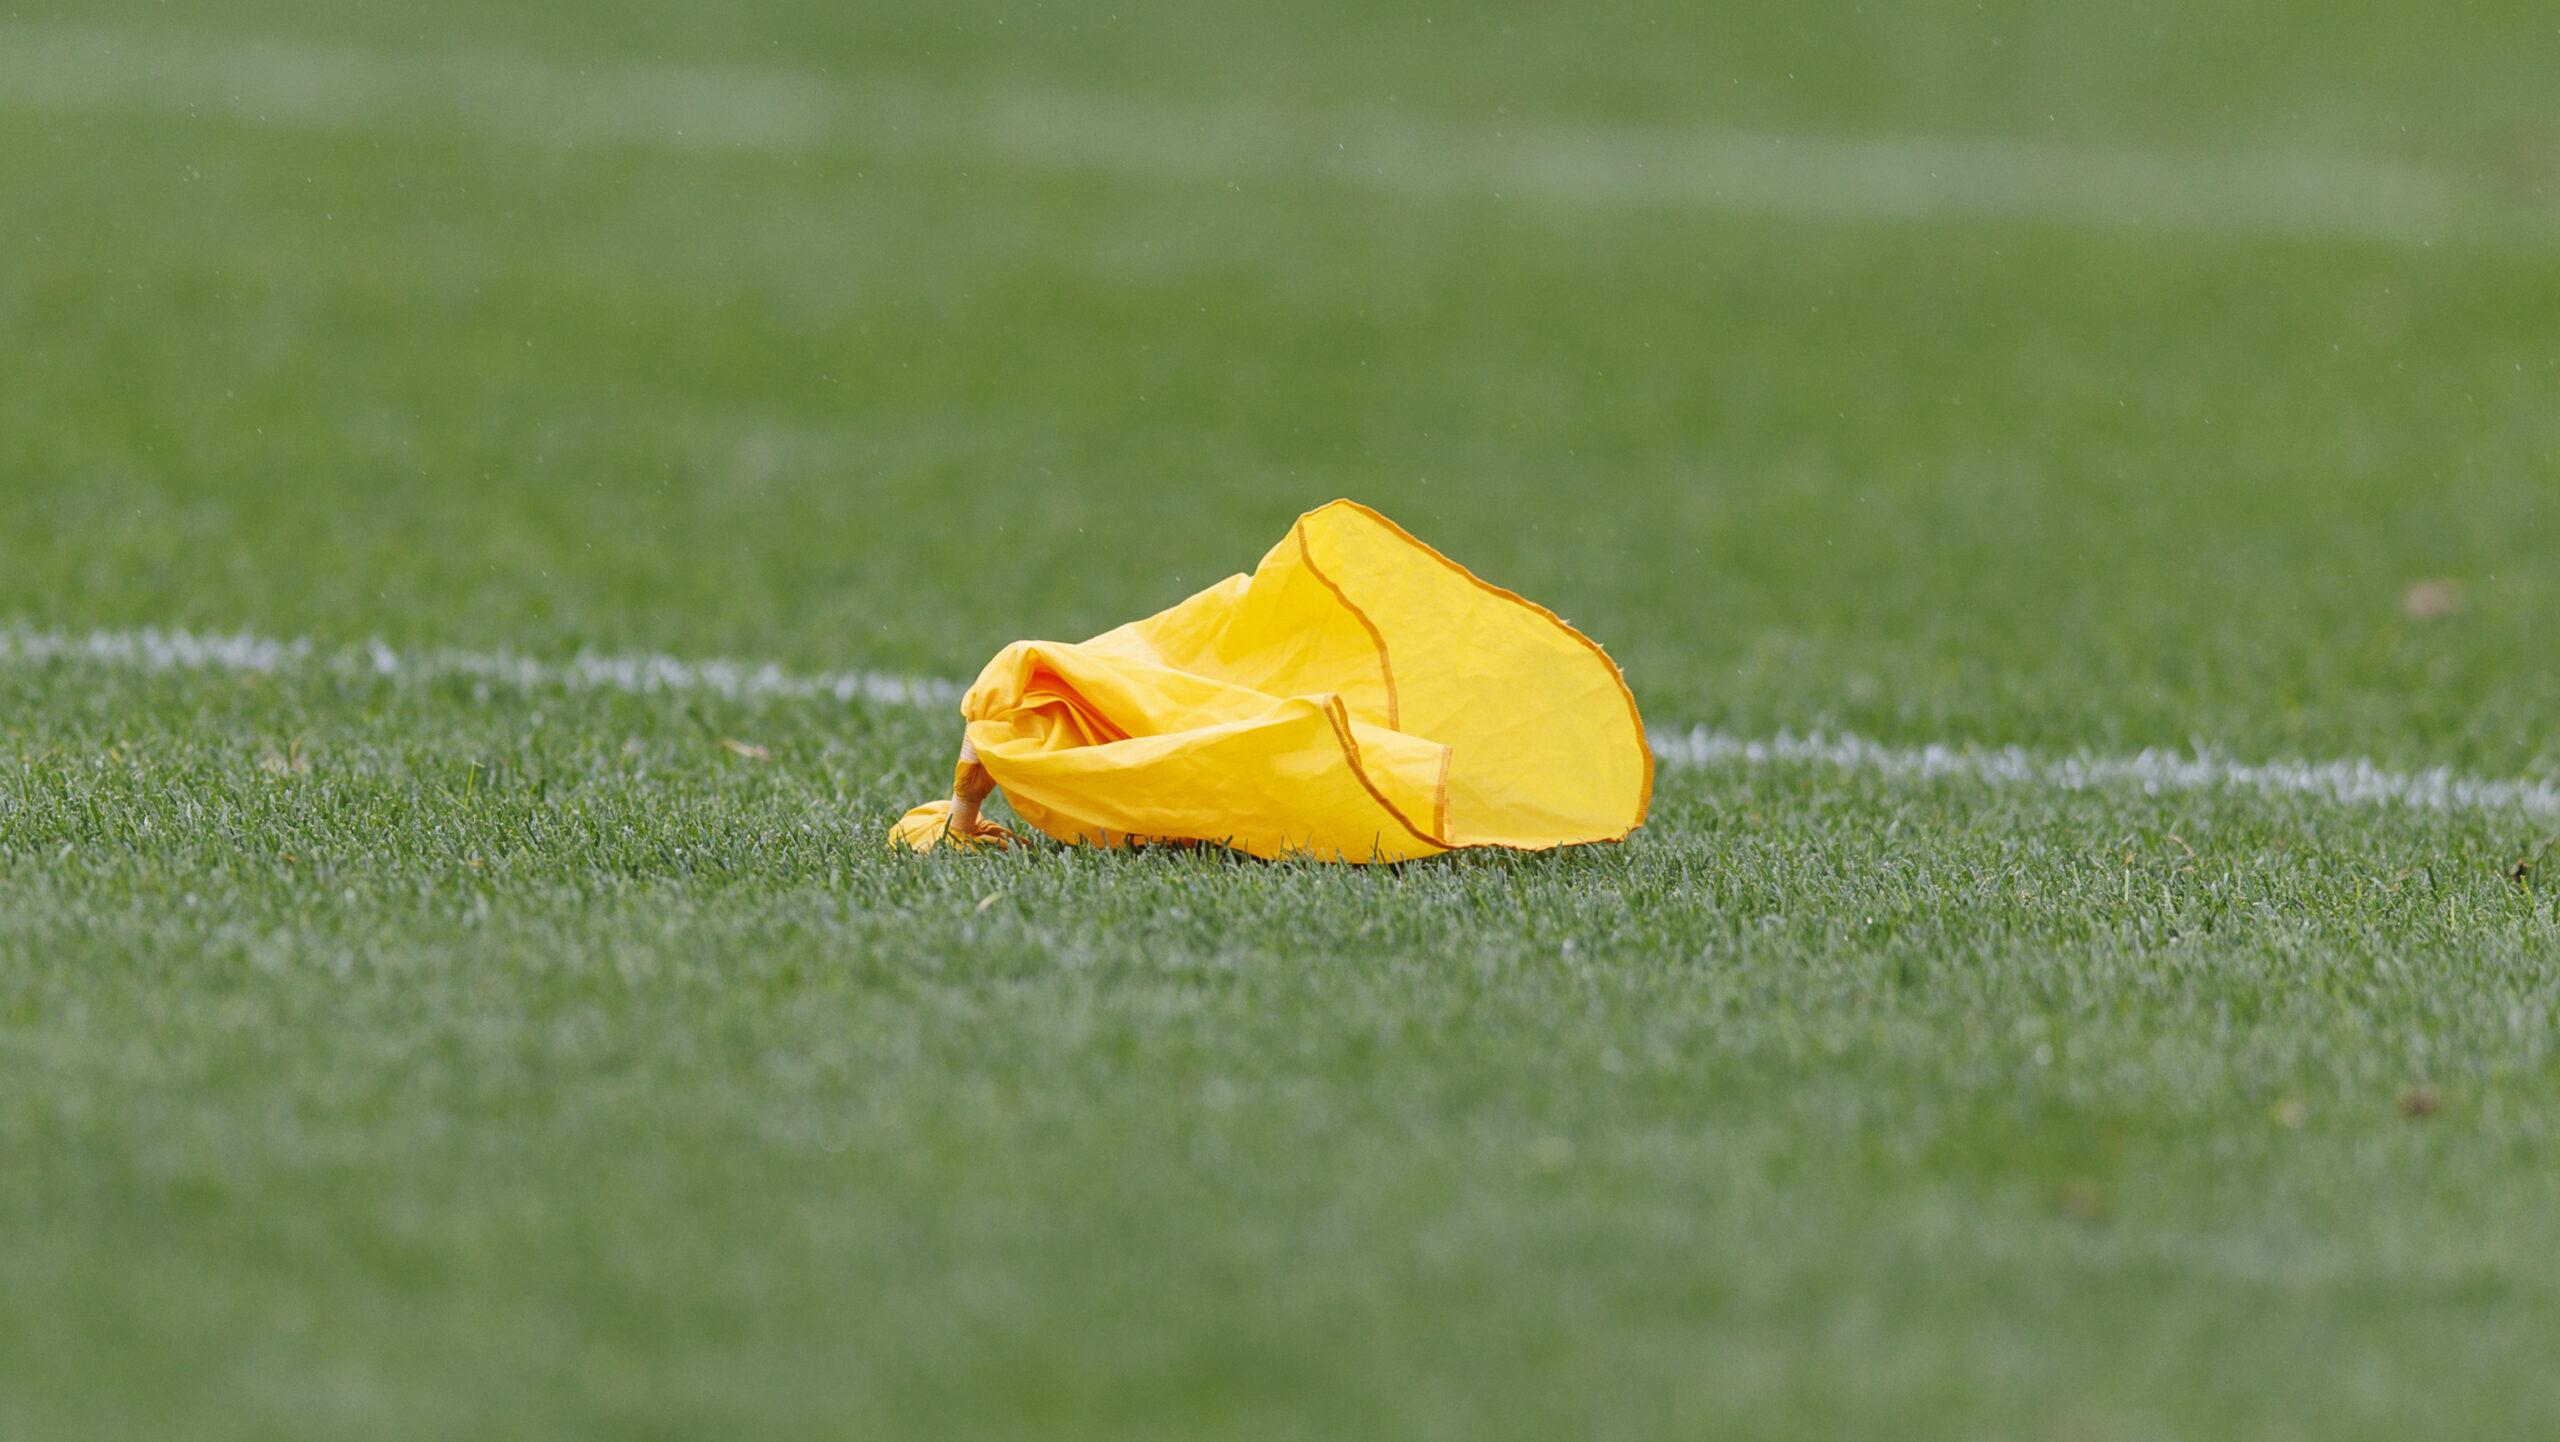 NFL penalty flag